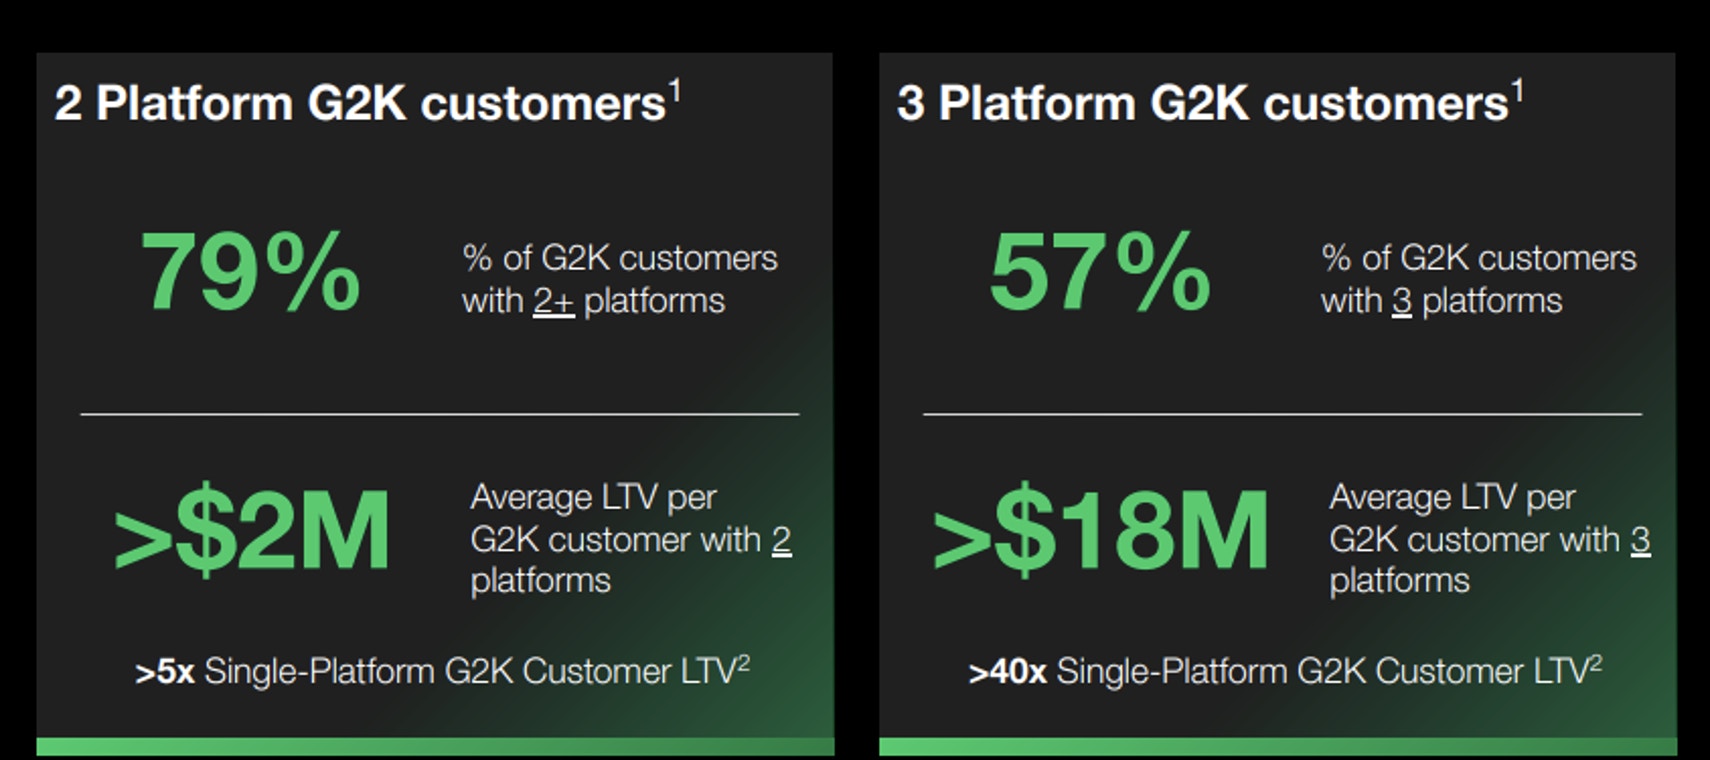 Platform G2K Customers